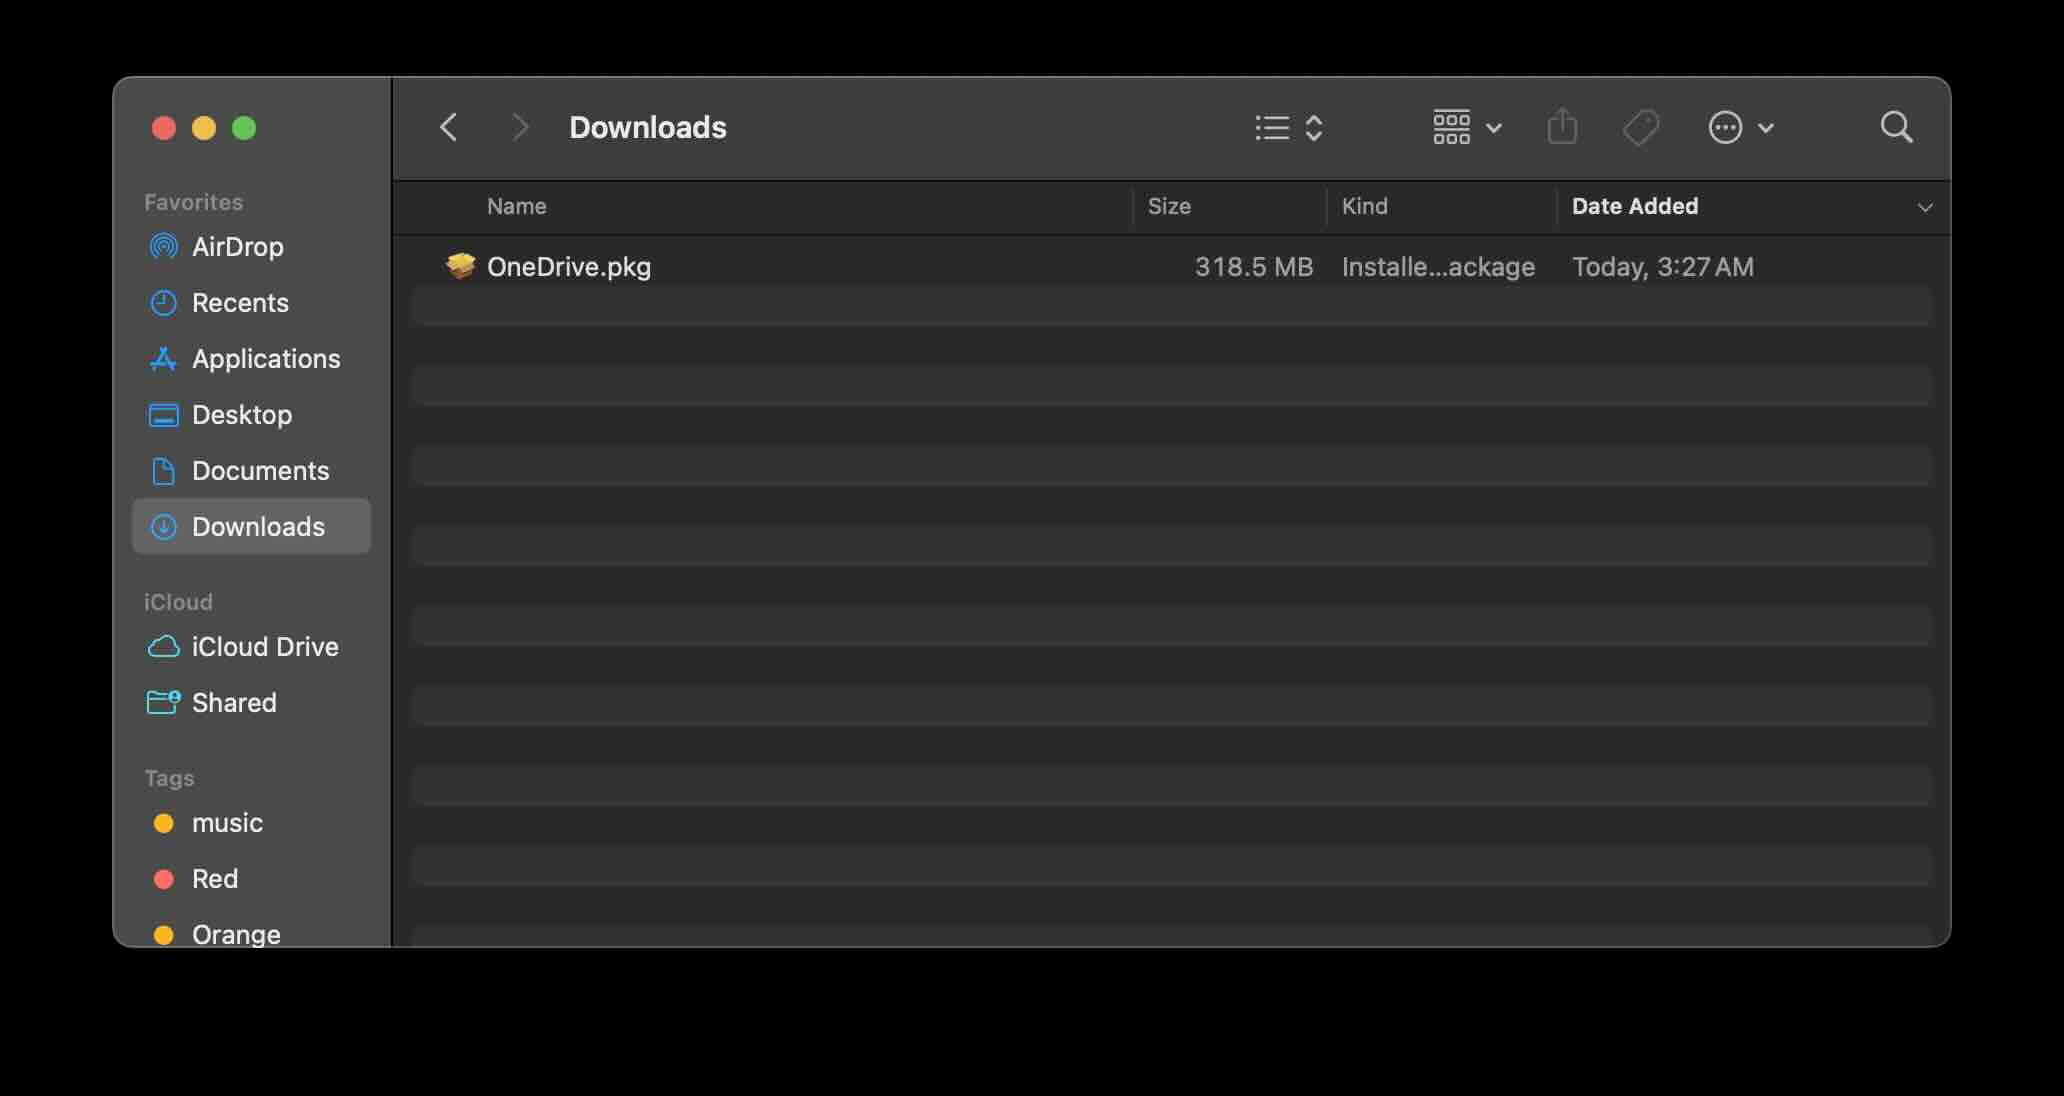 OneDrive.pkg file under Downloads